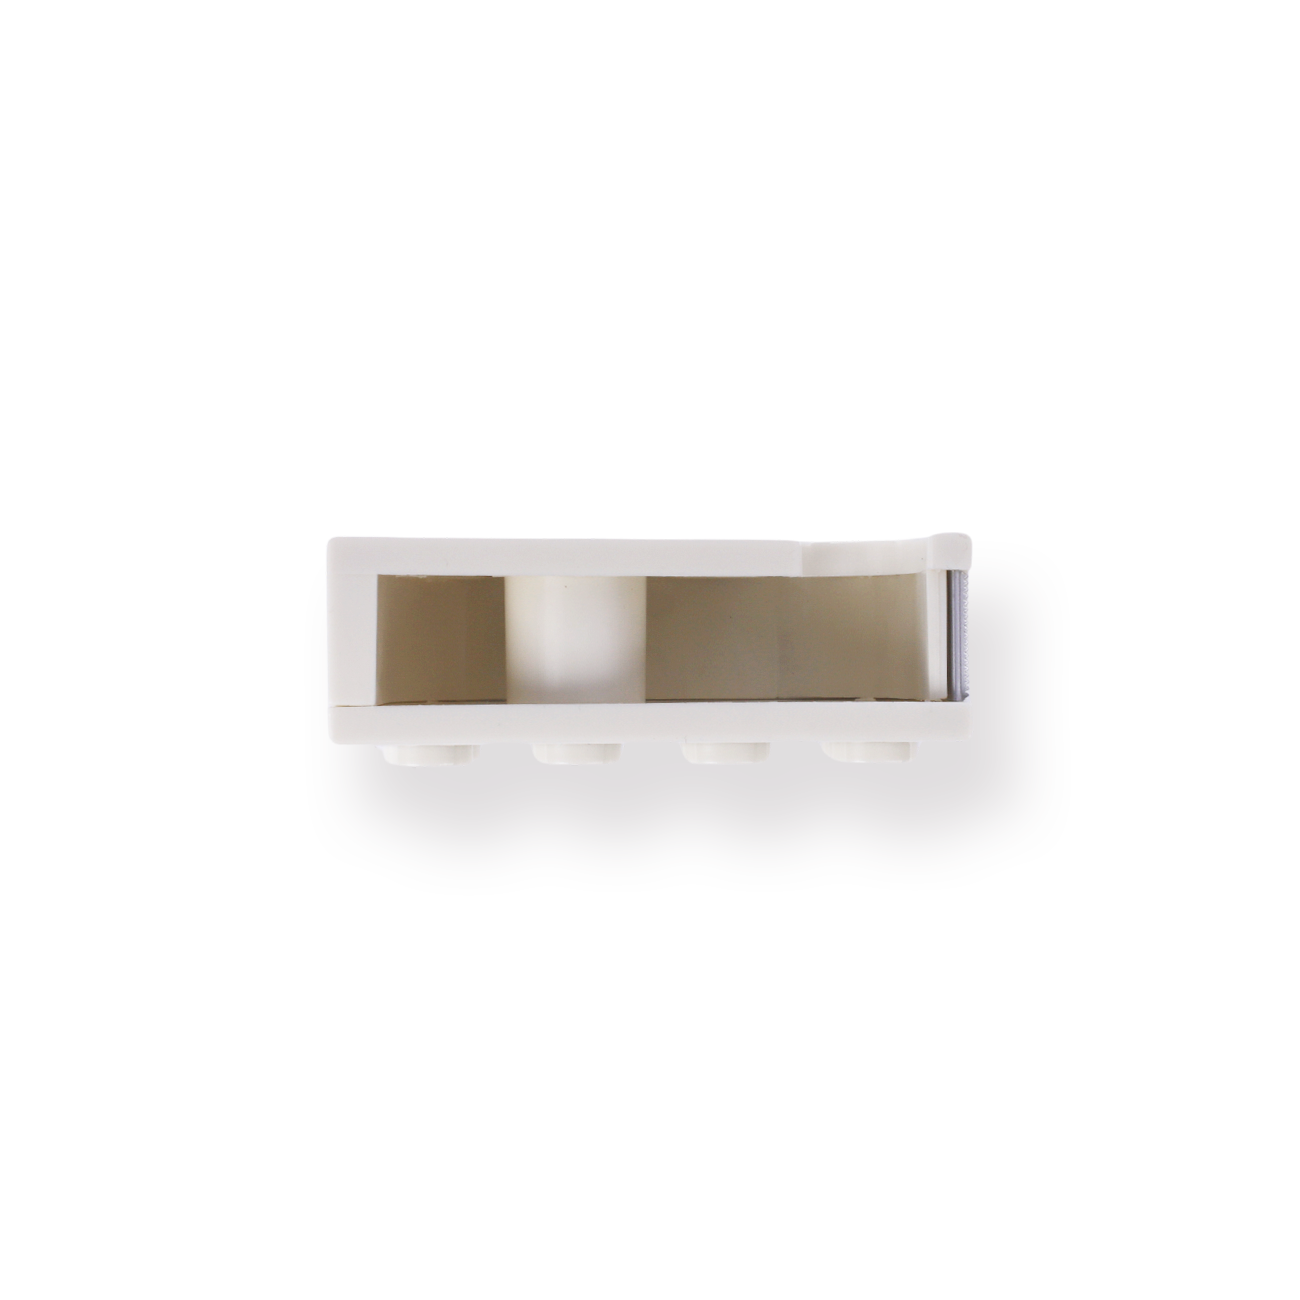 Building Block Tape Dispenser - White - Stationery Pal